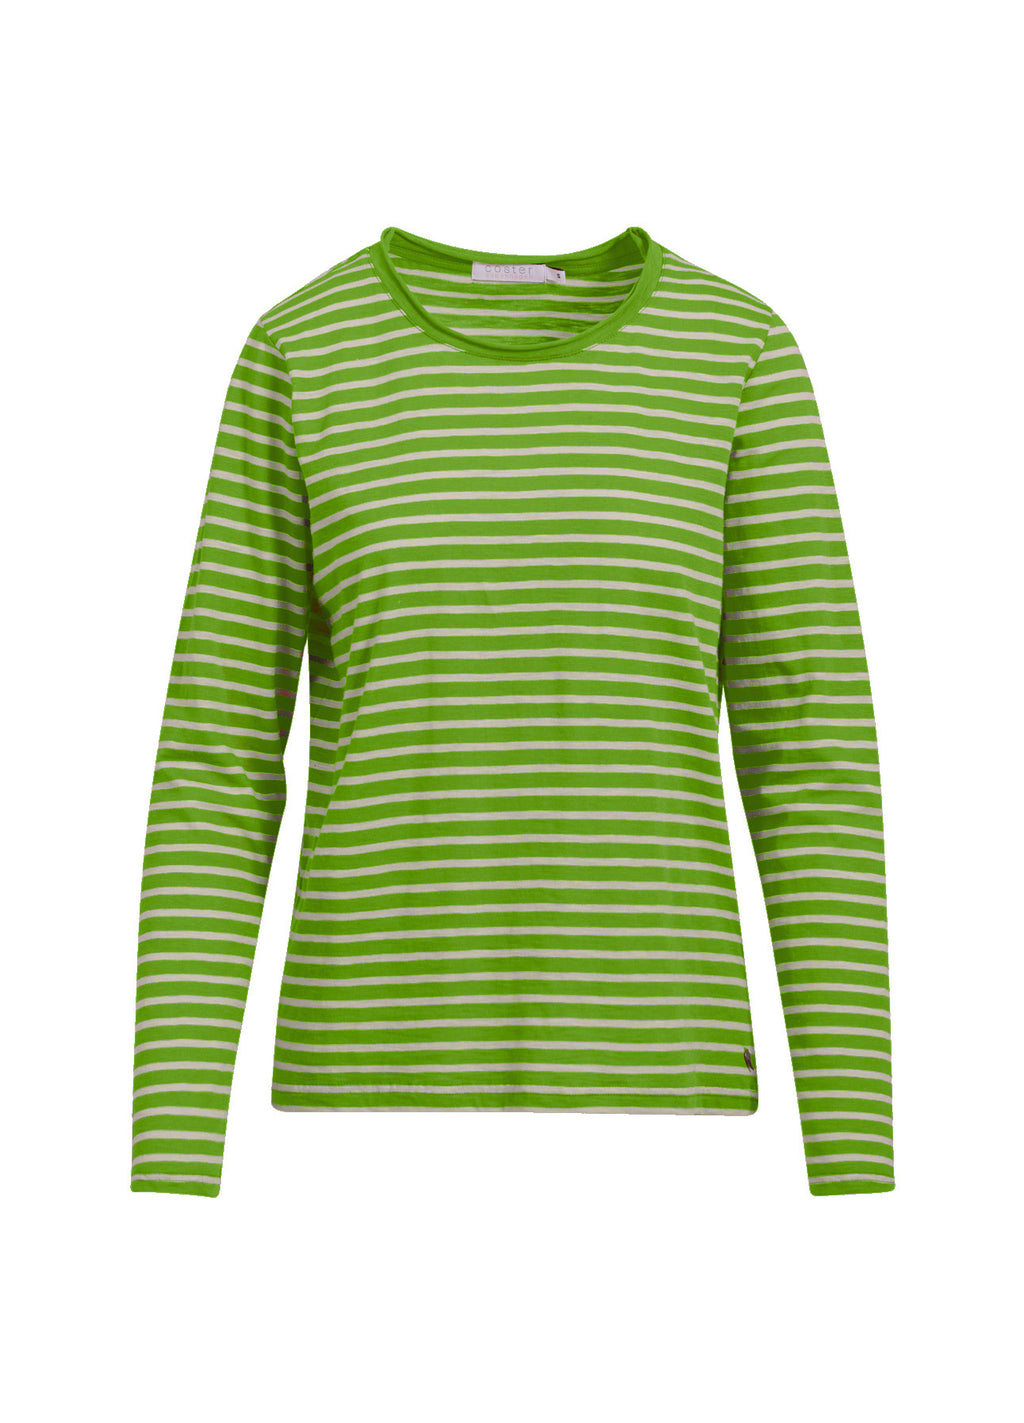 Striped T-Shirt Long Sleeve - Flash Green